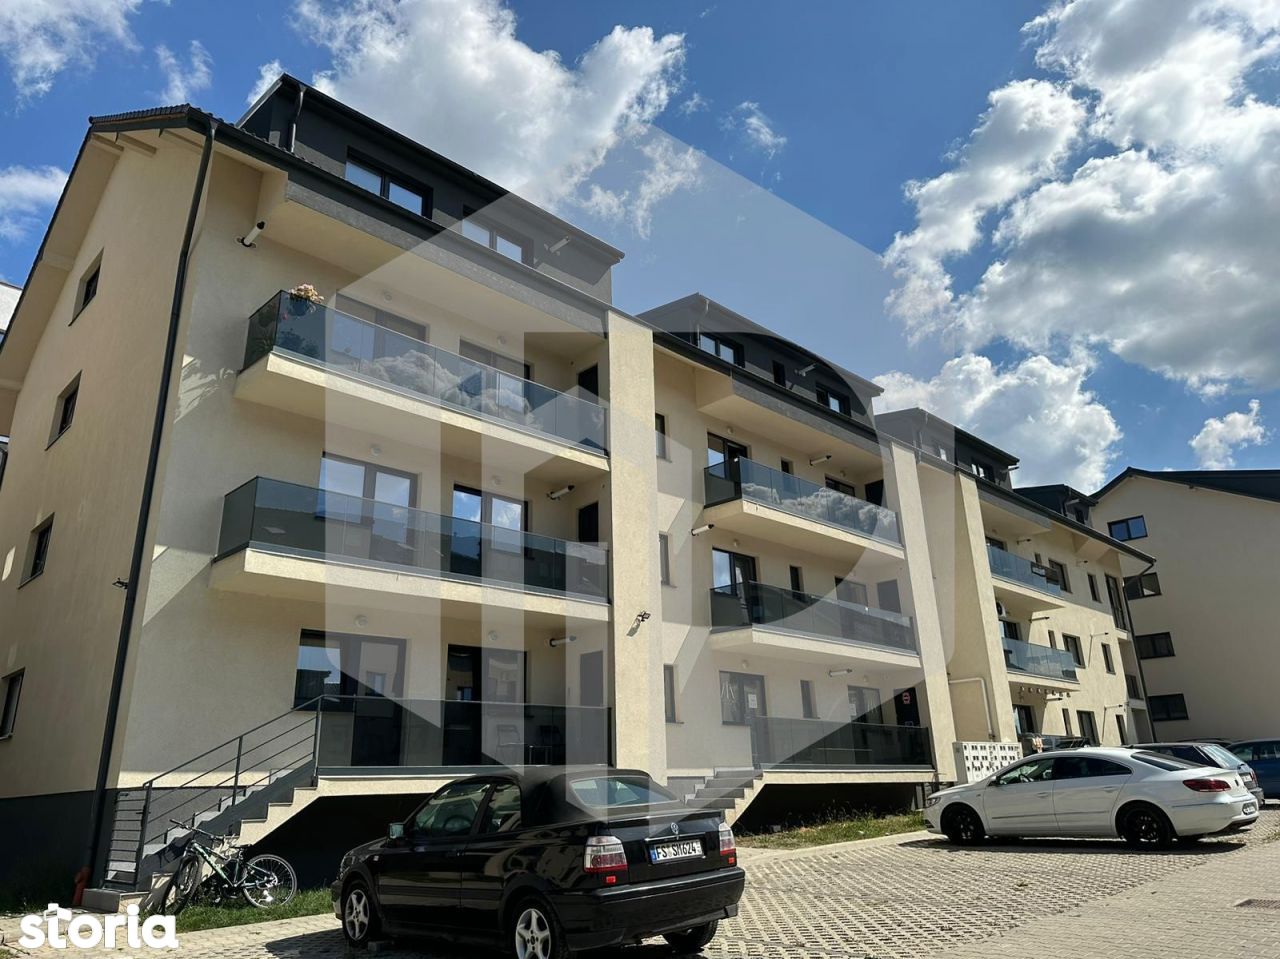 Etaj 3 / Apartament 2 camere / Total Decomandat / Mihai Viteazul